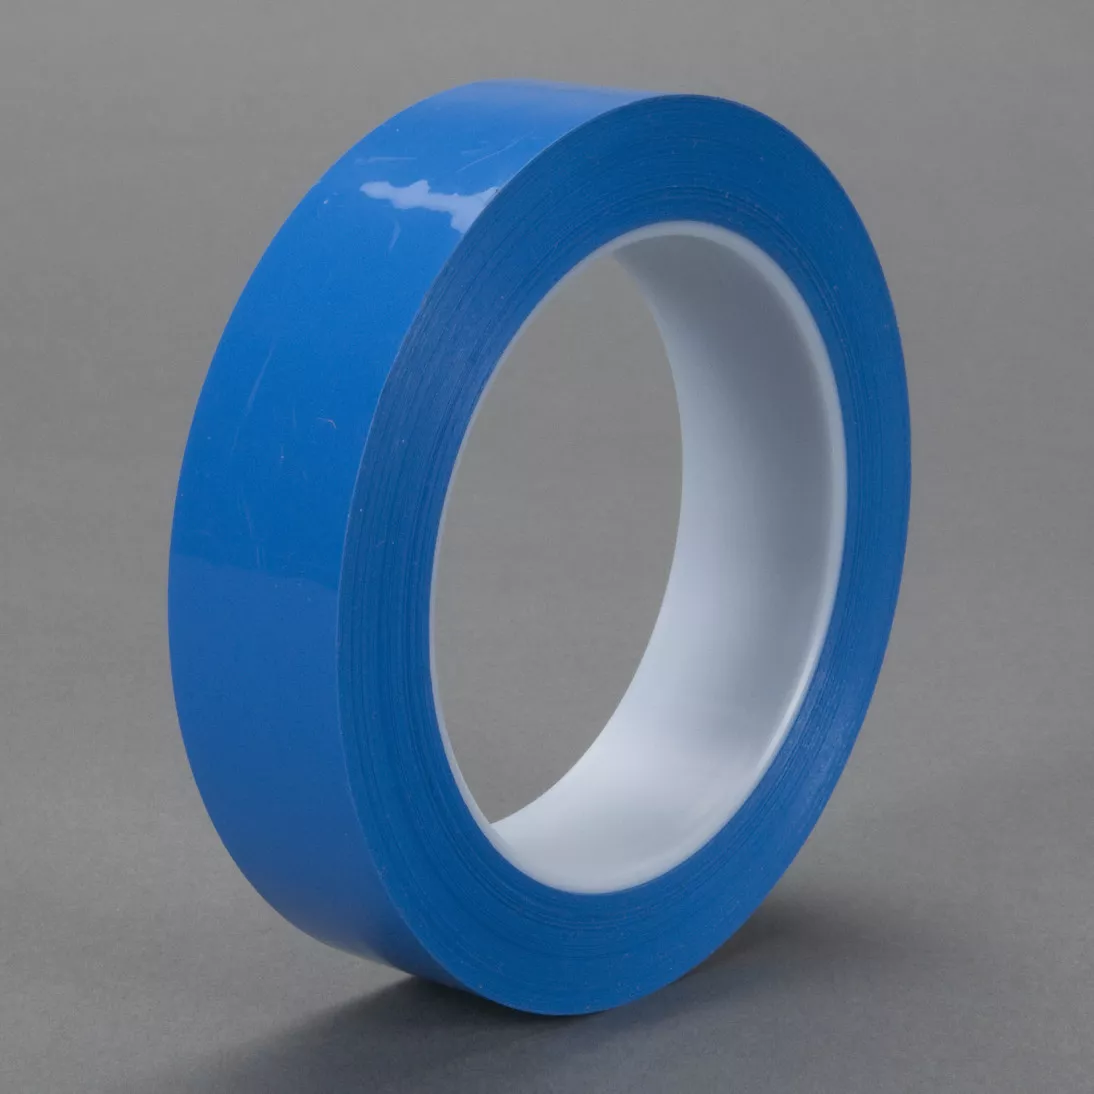 3M™ Polyethylene Tape 483, Blue, 1 in x 36 yd, 5.0 mil, 36 rolls per
case